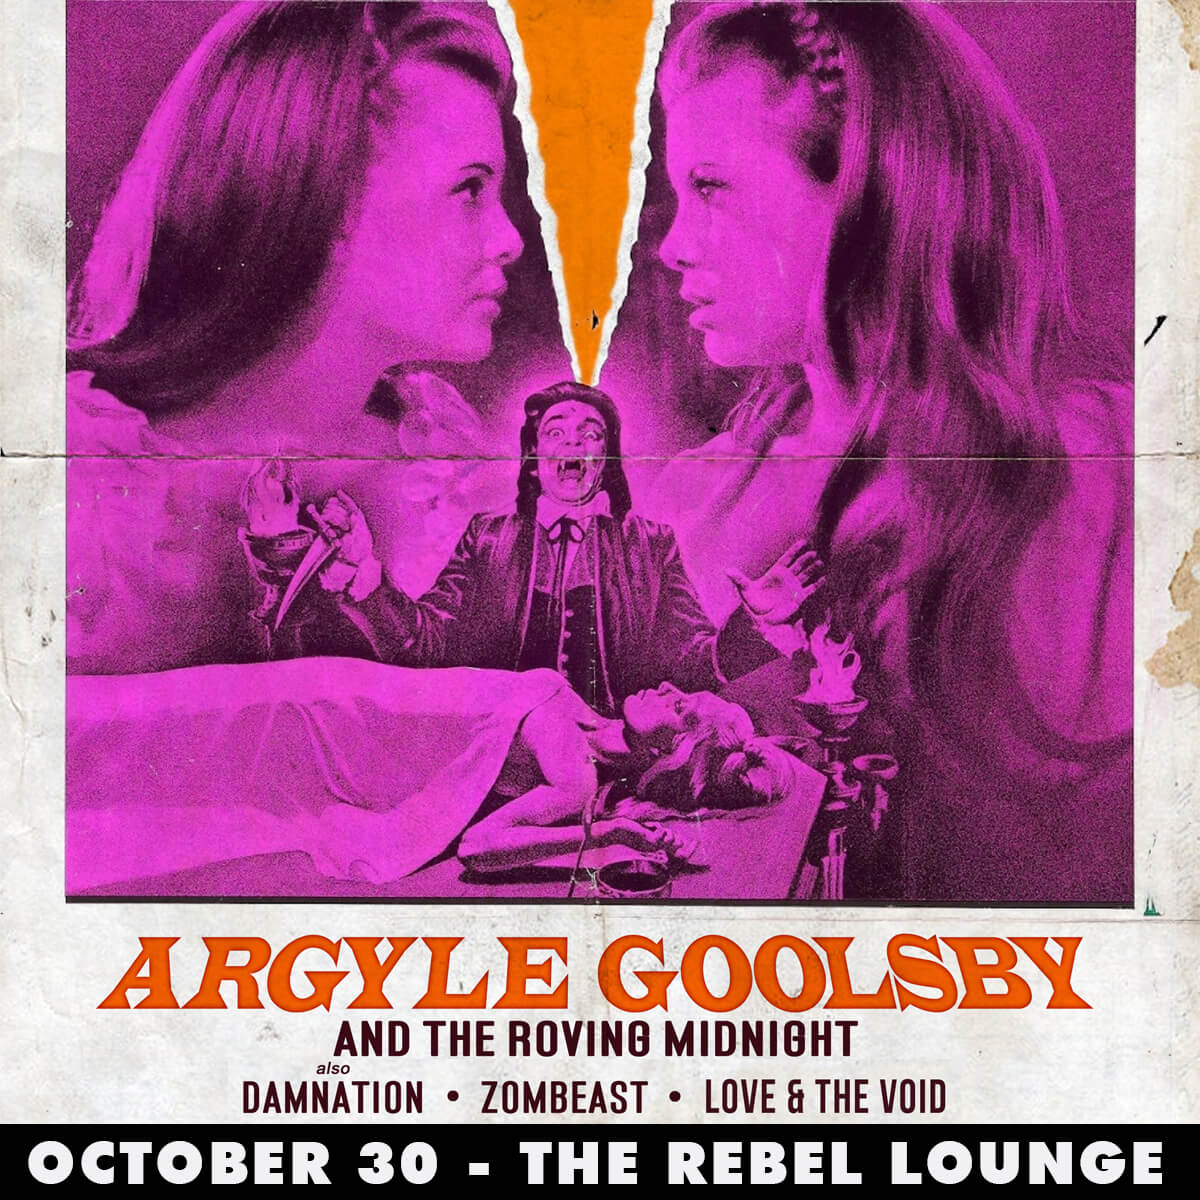 ARGYLE GOOLSBYThe Rebel Lounge